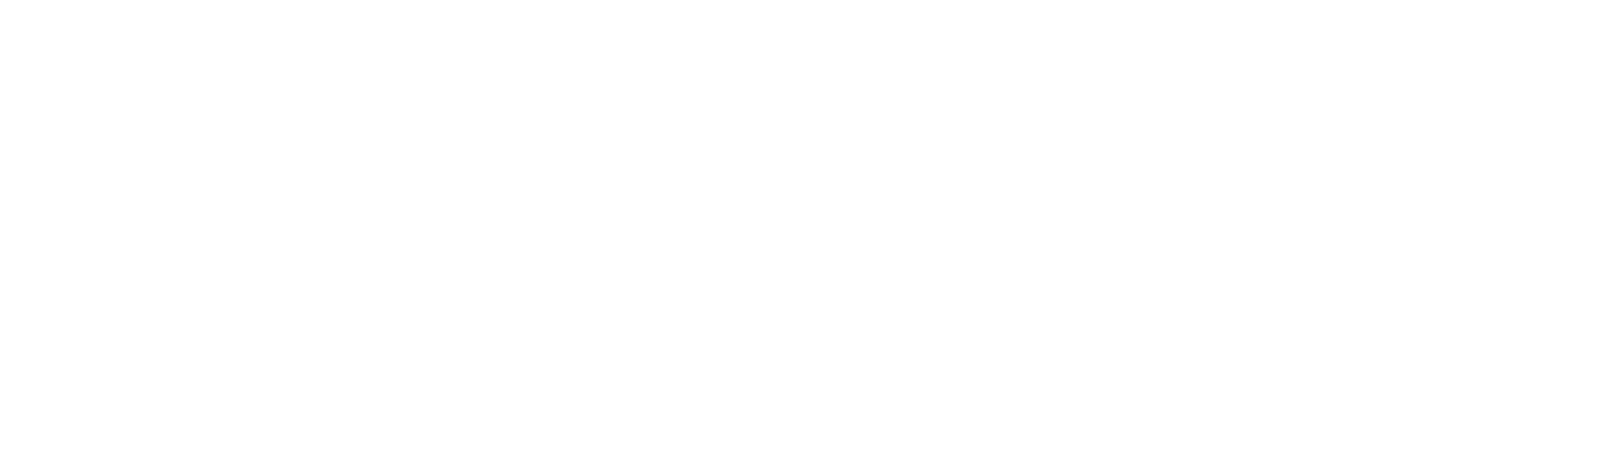 Bank of China logo grand pour les fonds sombres (PNG transparent)